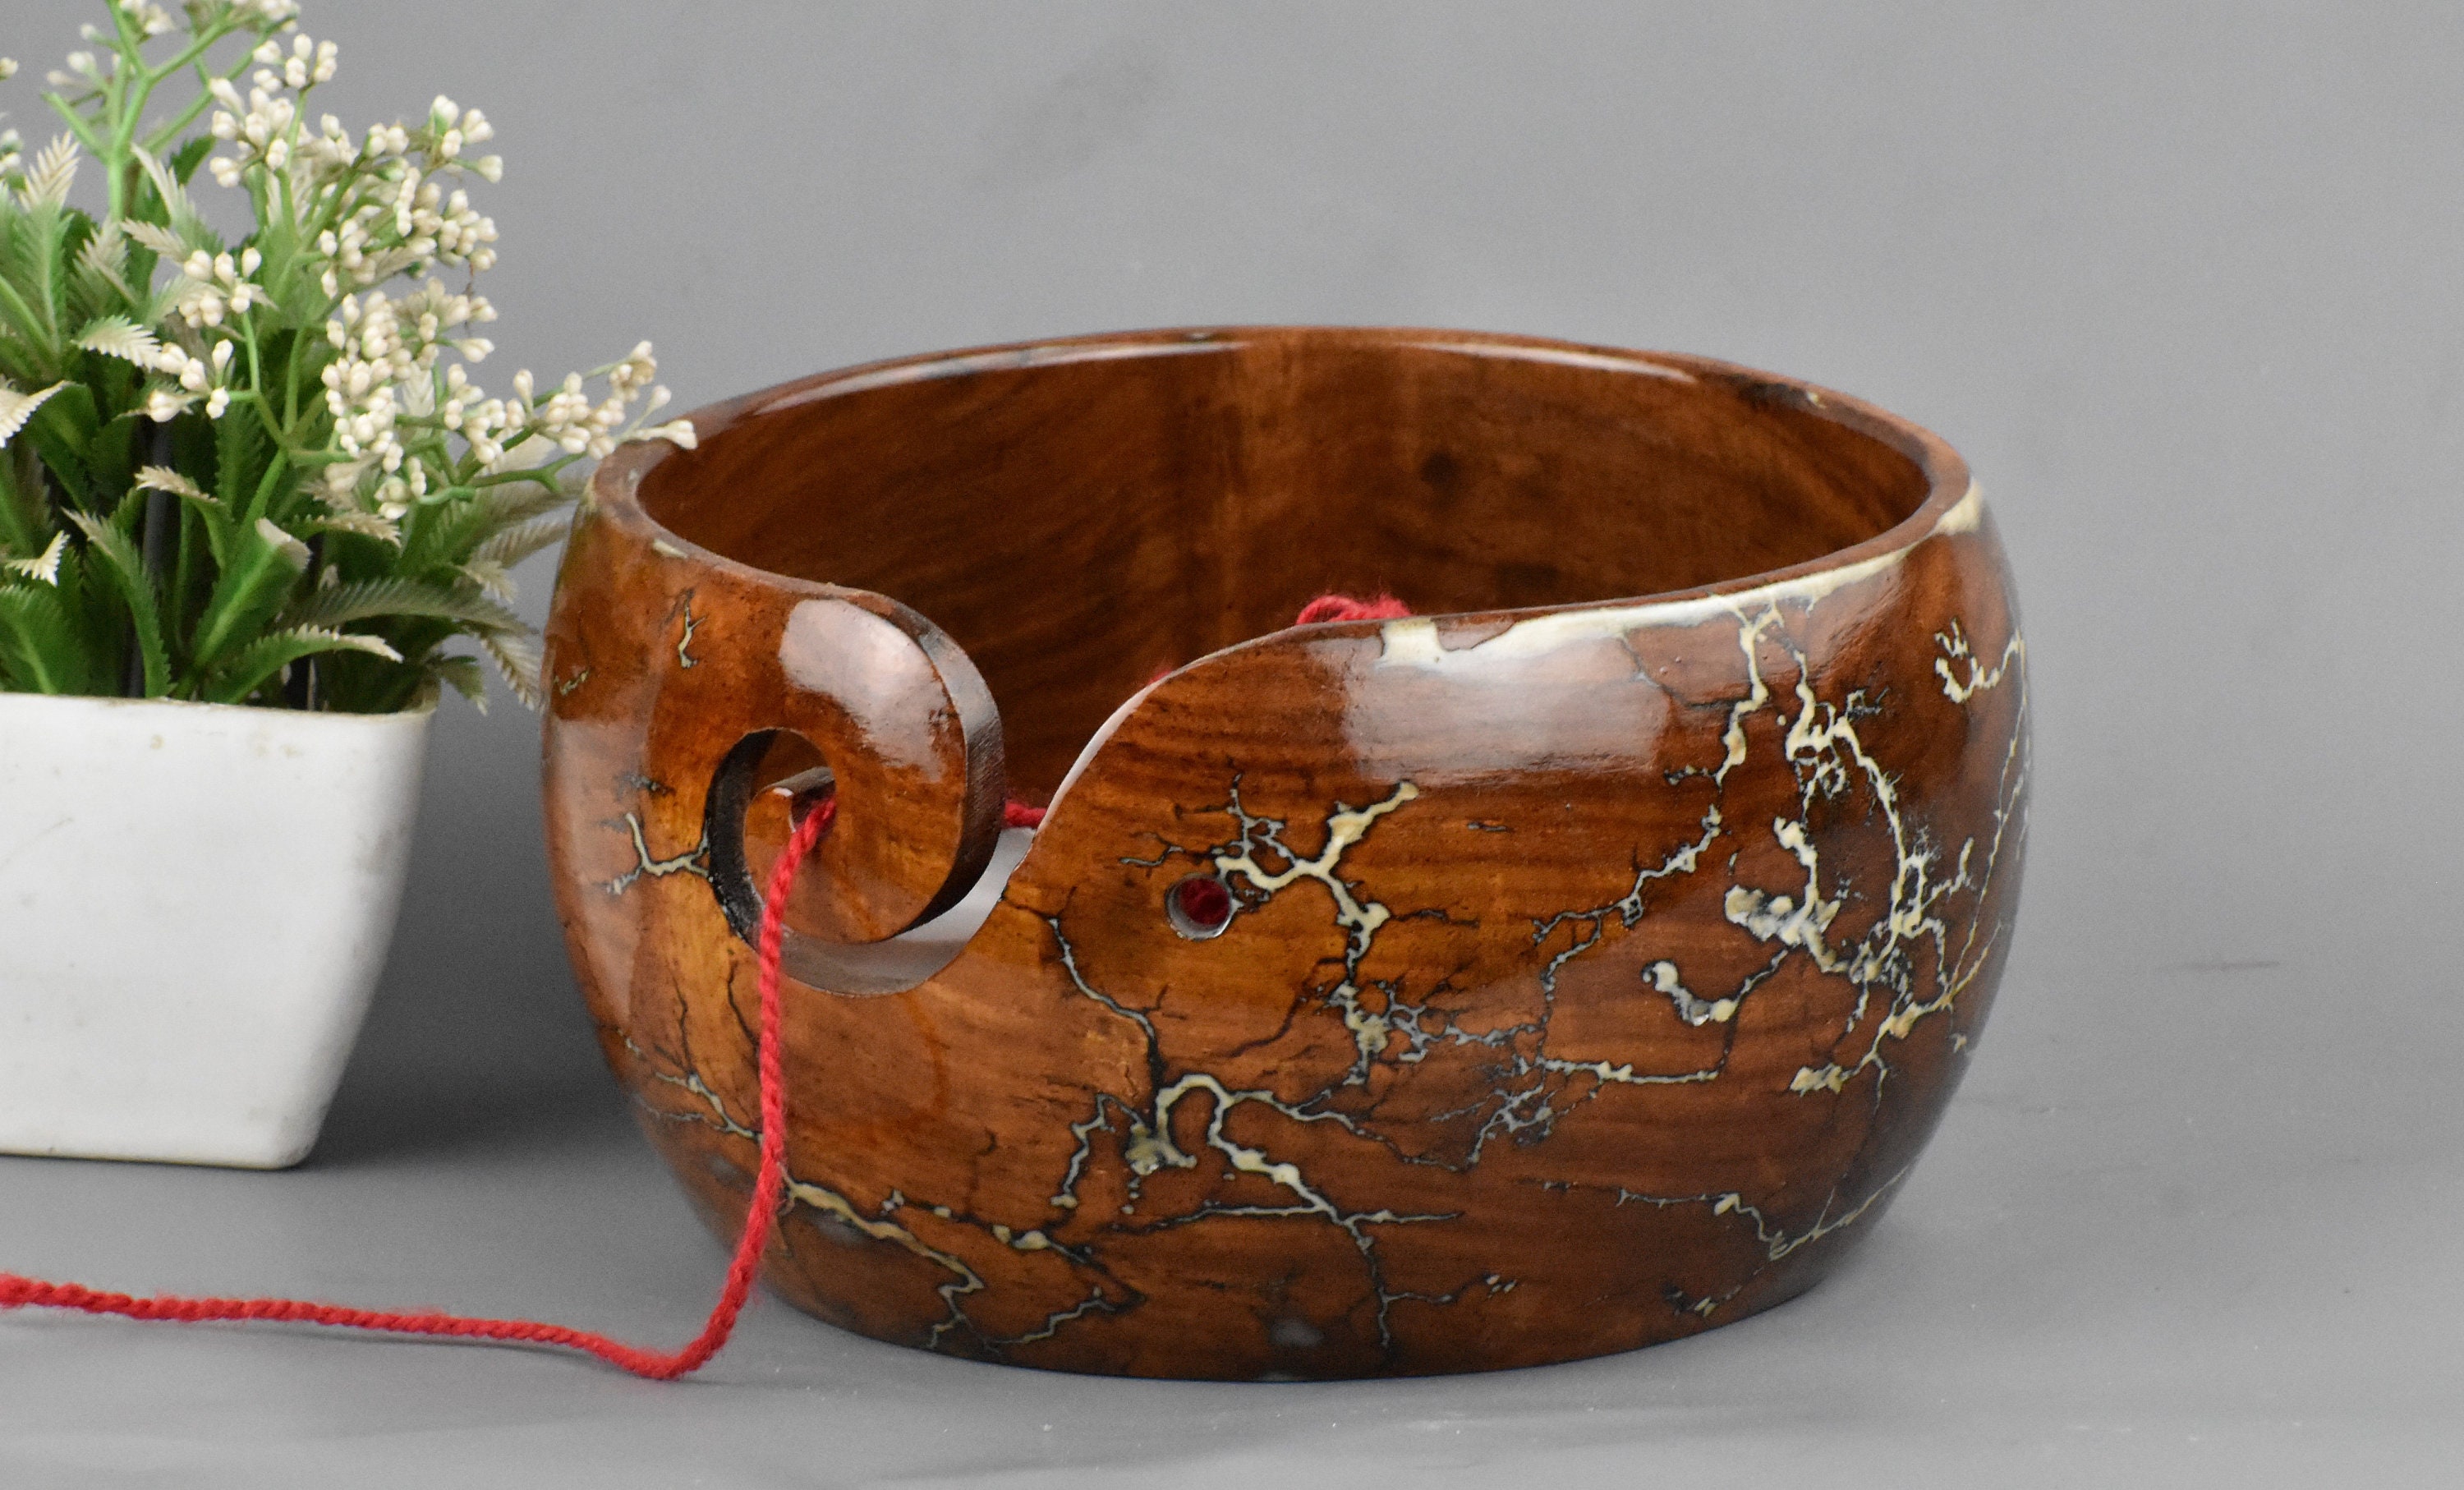 Wooden yarn bowl - Buy smart & neat pine yarn bowls